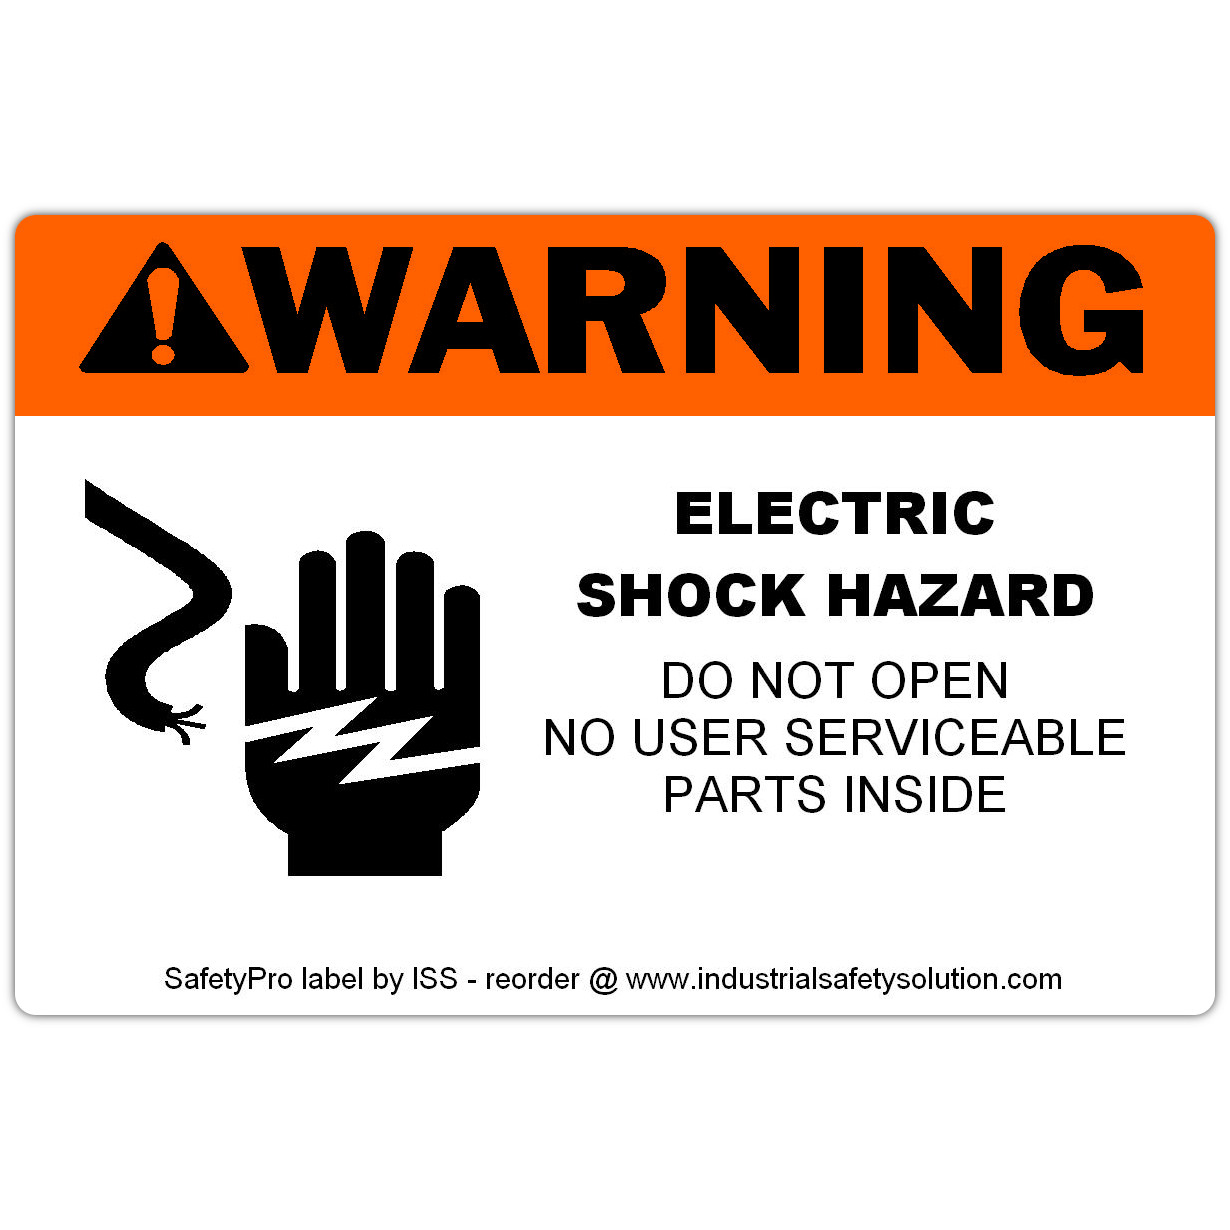 Detail view for 4" x 6" WARNING Electric Shock Hazard Label